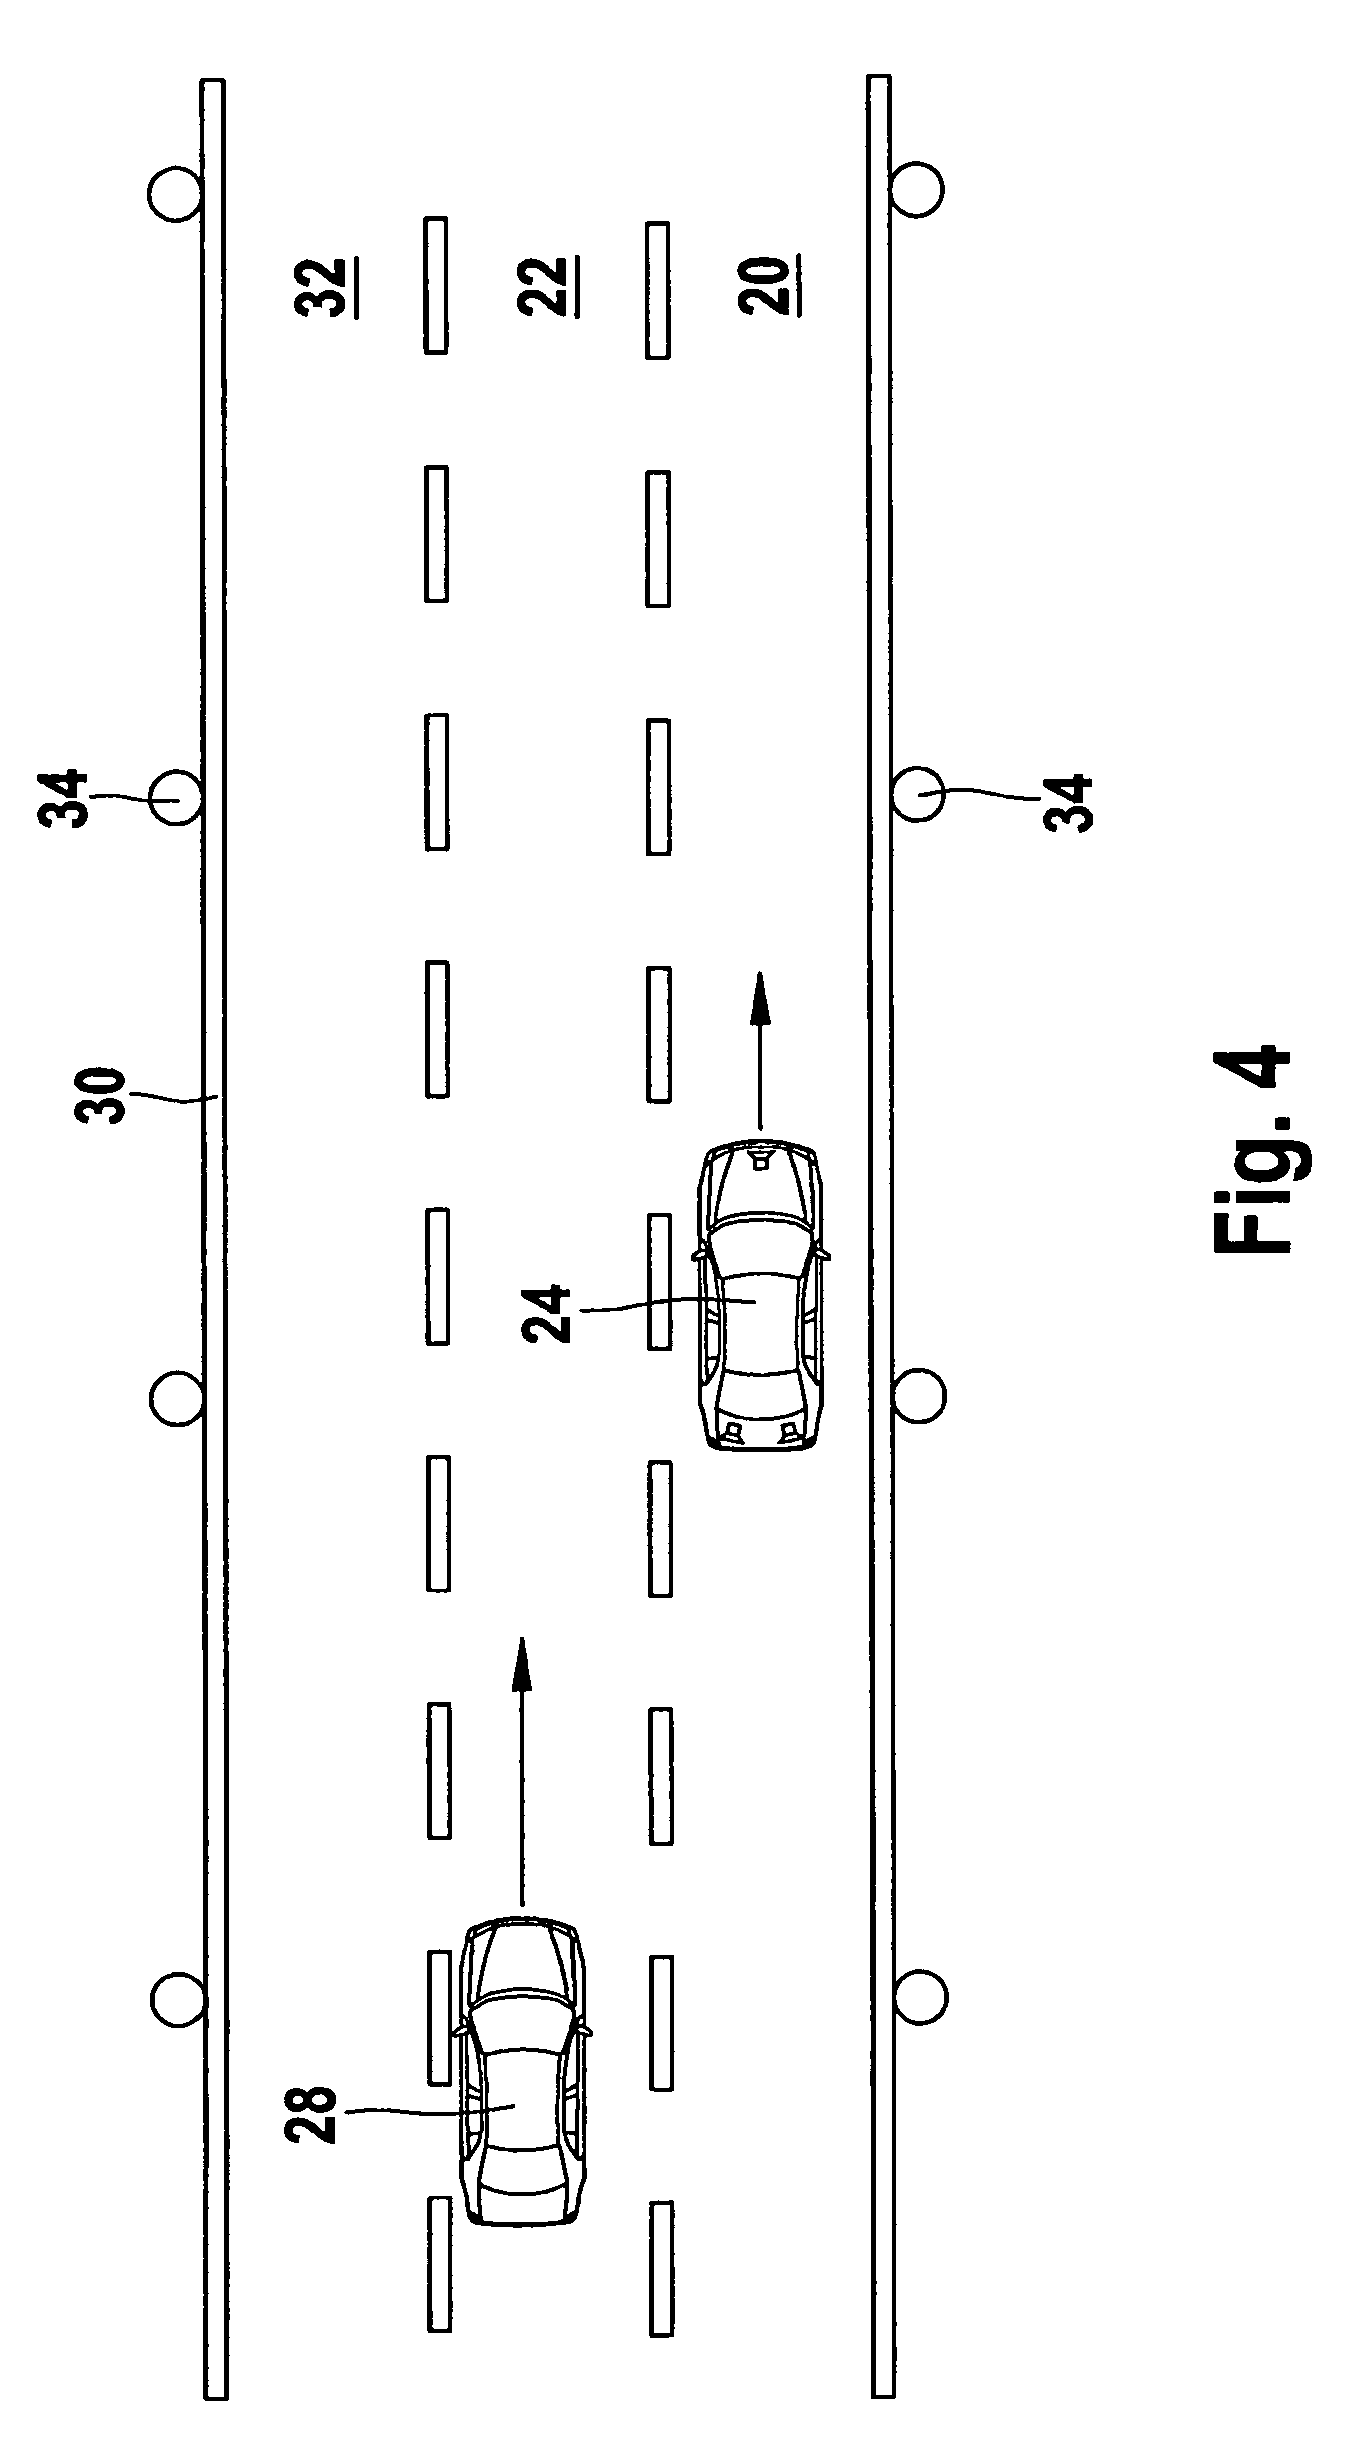 Lane-change assistant for motor vehicles